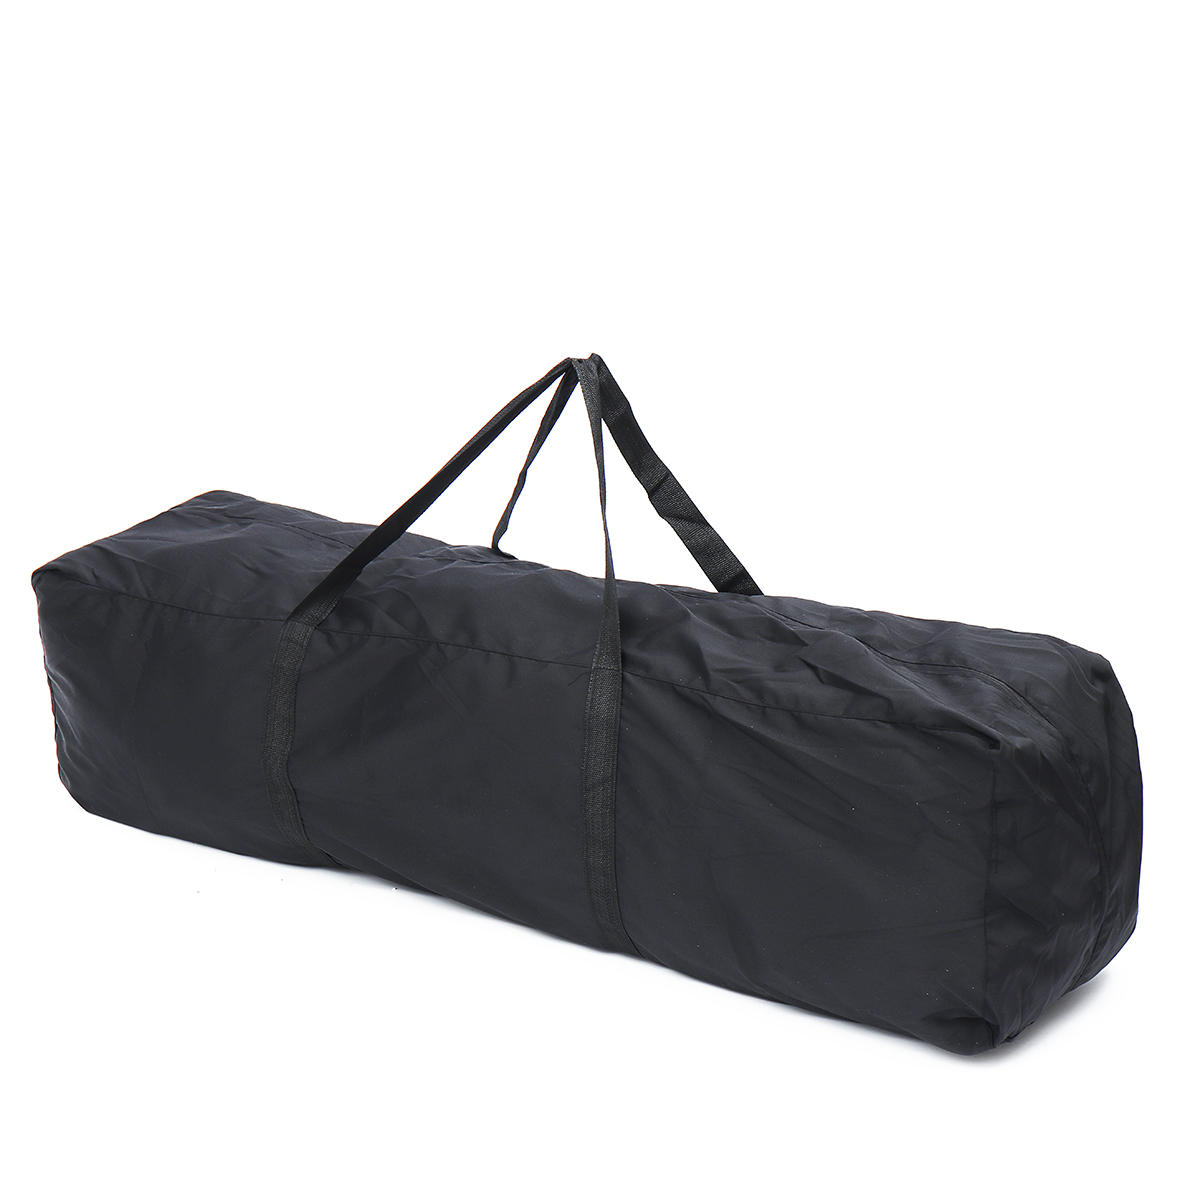 11l屋外旅行ホリデーケースバッグ防水デイパックハンドバッグ収納バッグ用maclarenバギーベビーカー